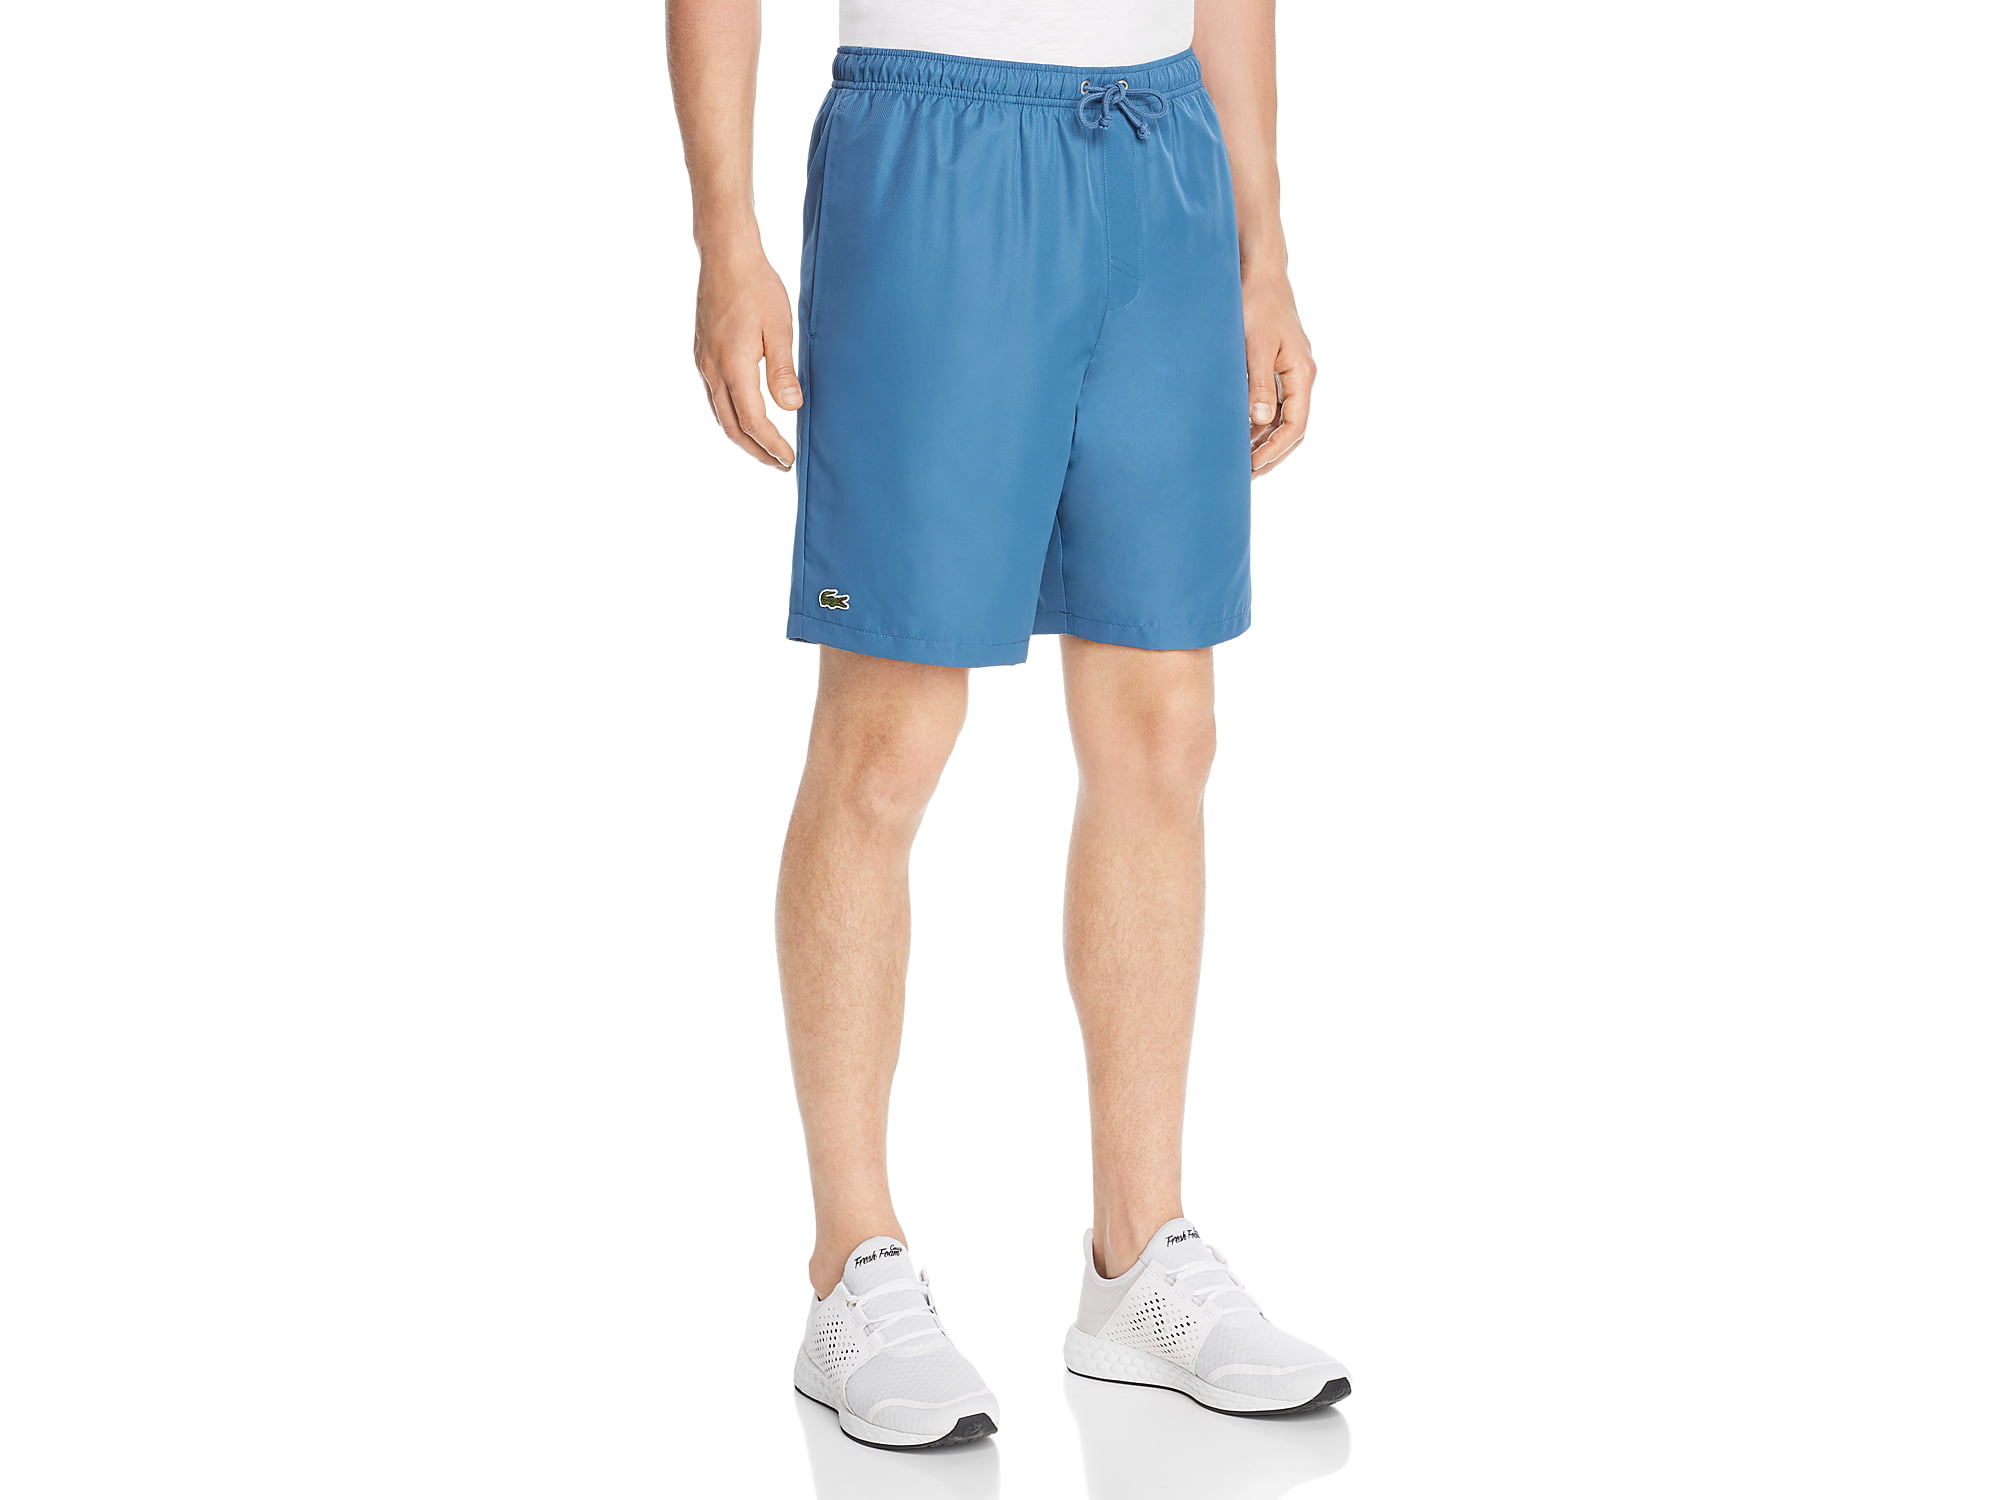 Lacoste - Lacoste Men's Big & Tall Sport Lined Tennis Short, Blue,7